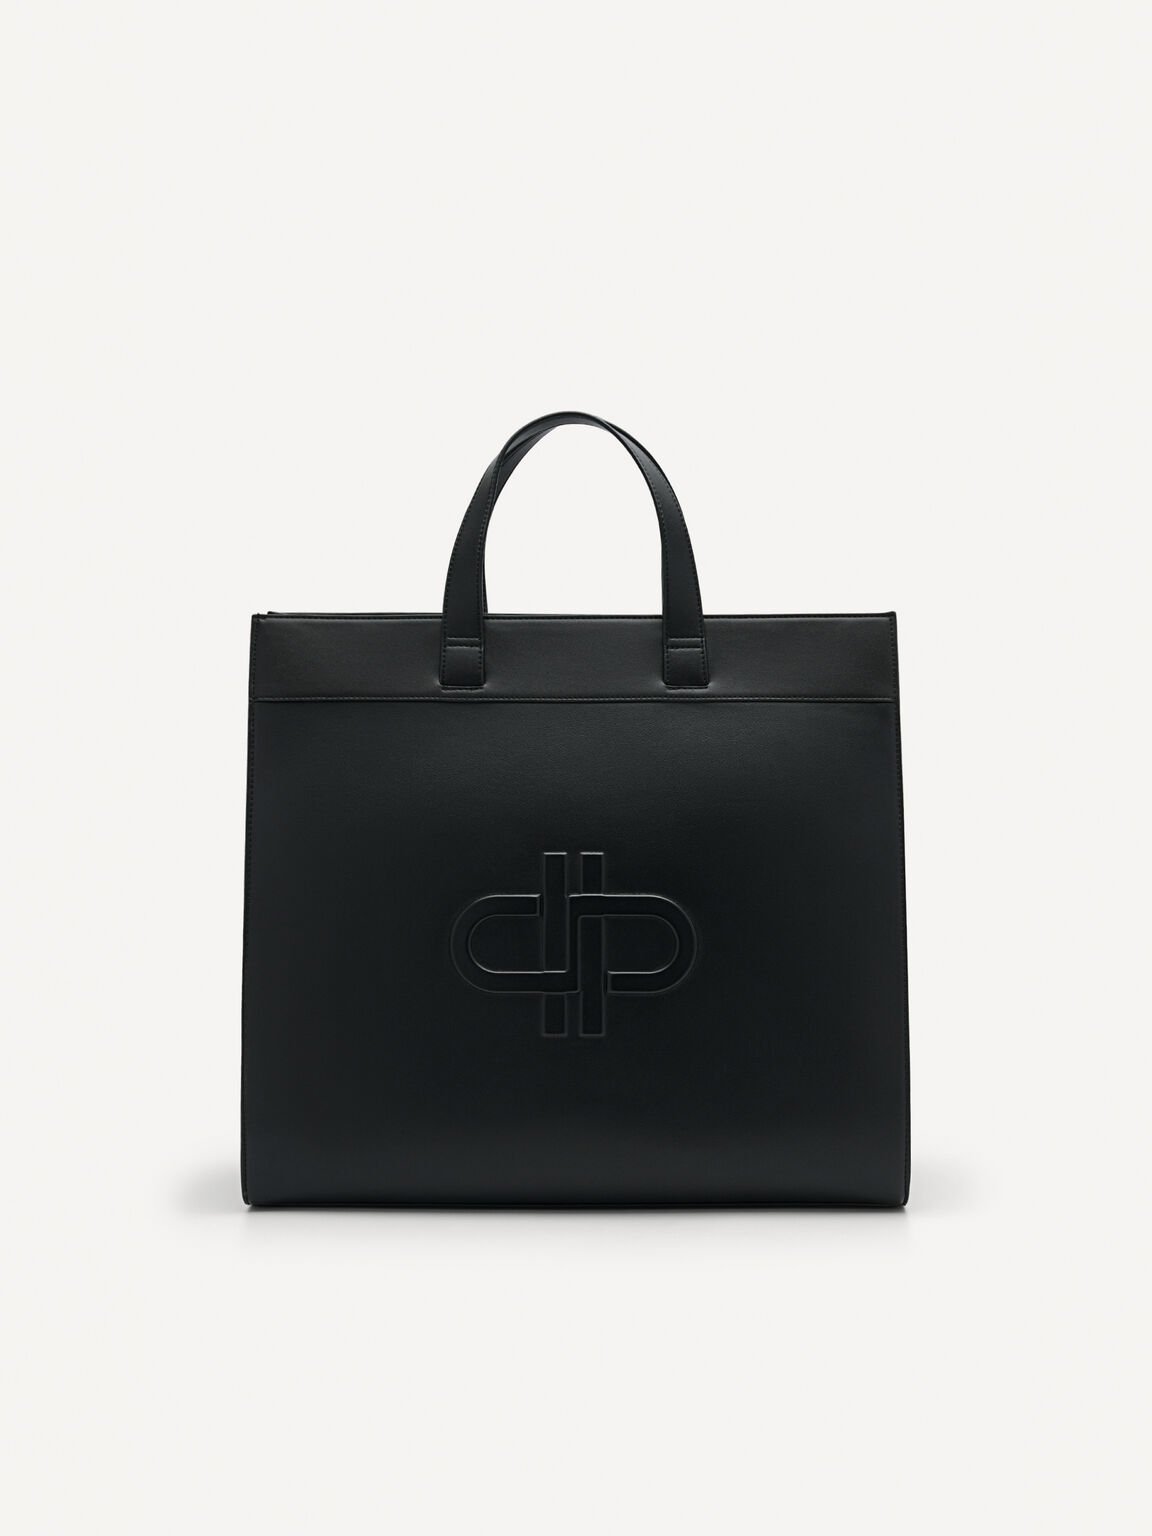 PEDRO Icon Tote Bag, Black, hi-res